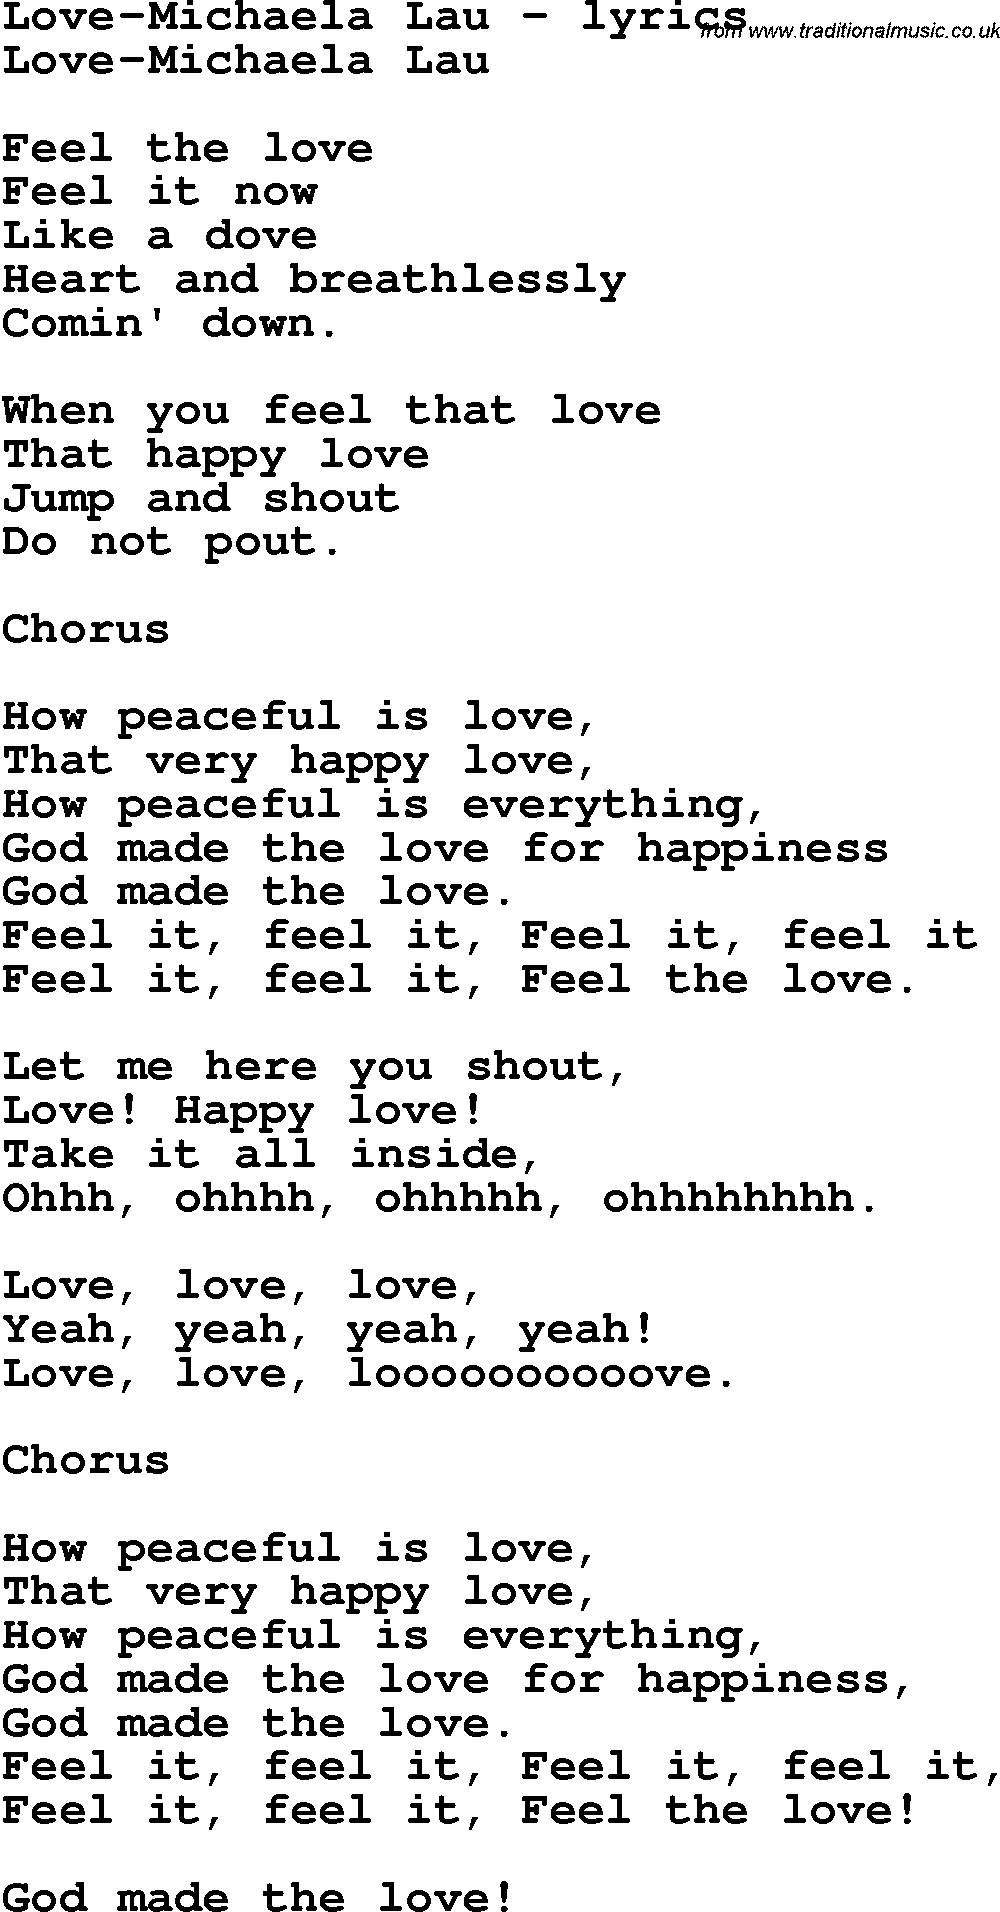 Love Song Lyrics for: Love-Michaela Lau